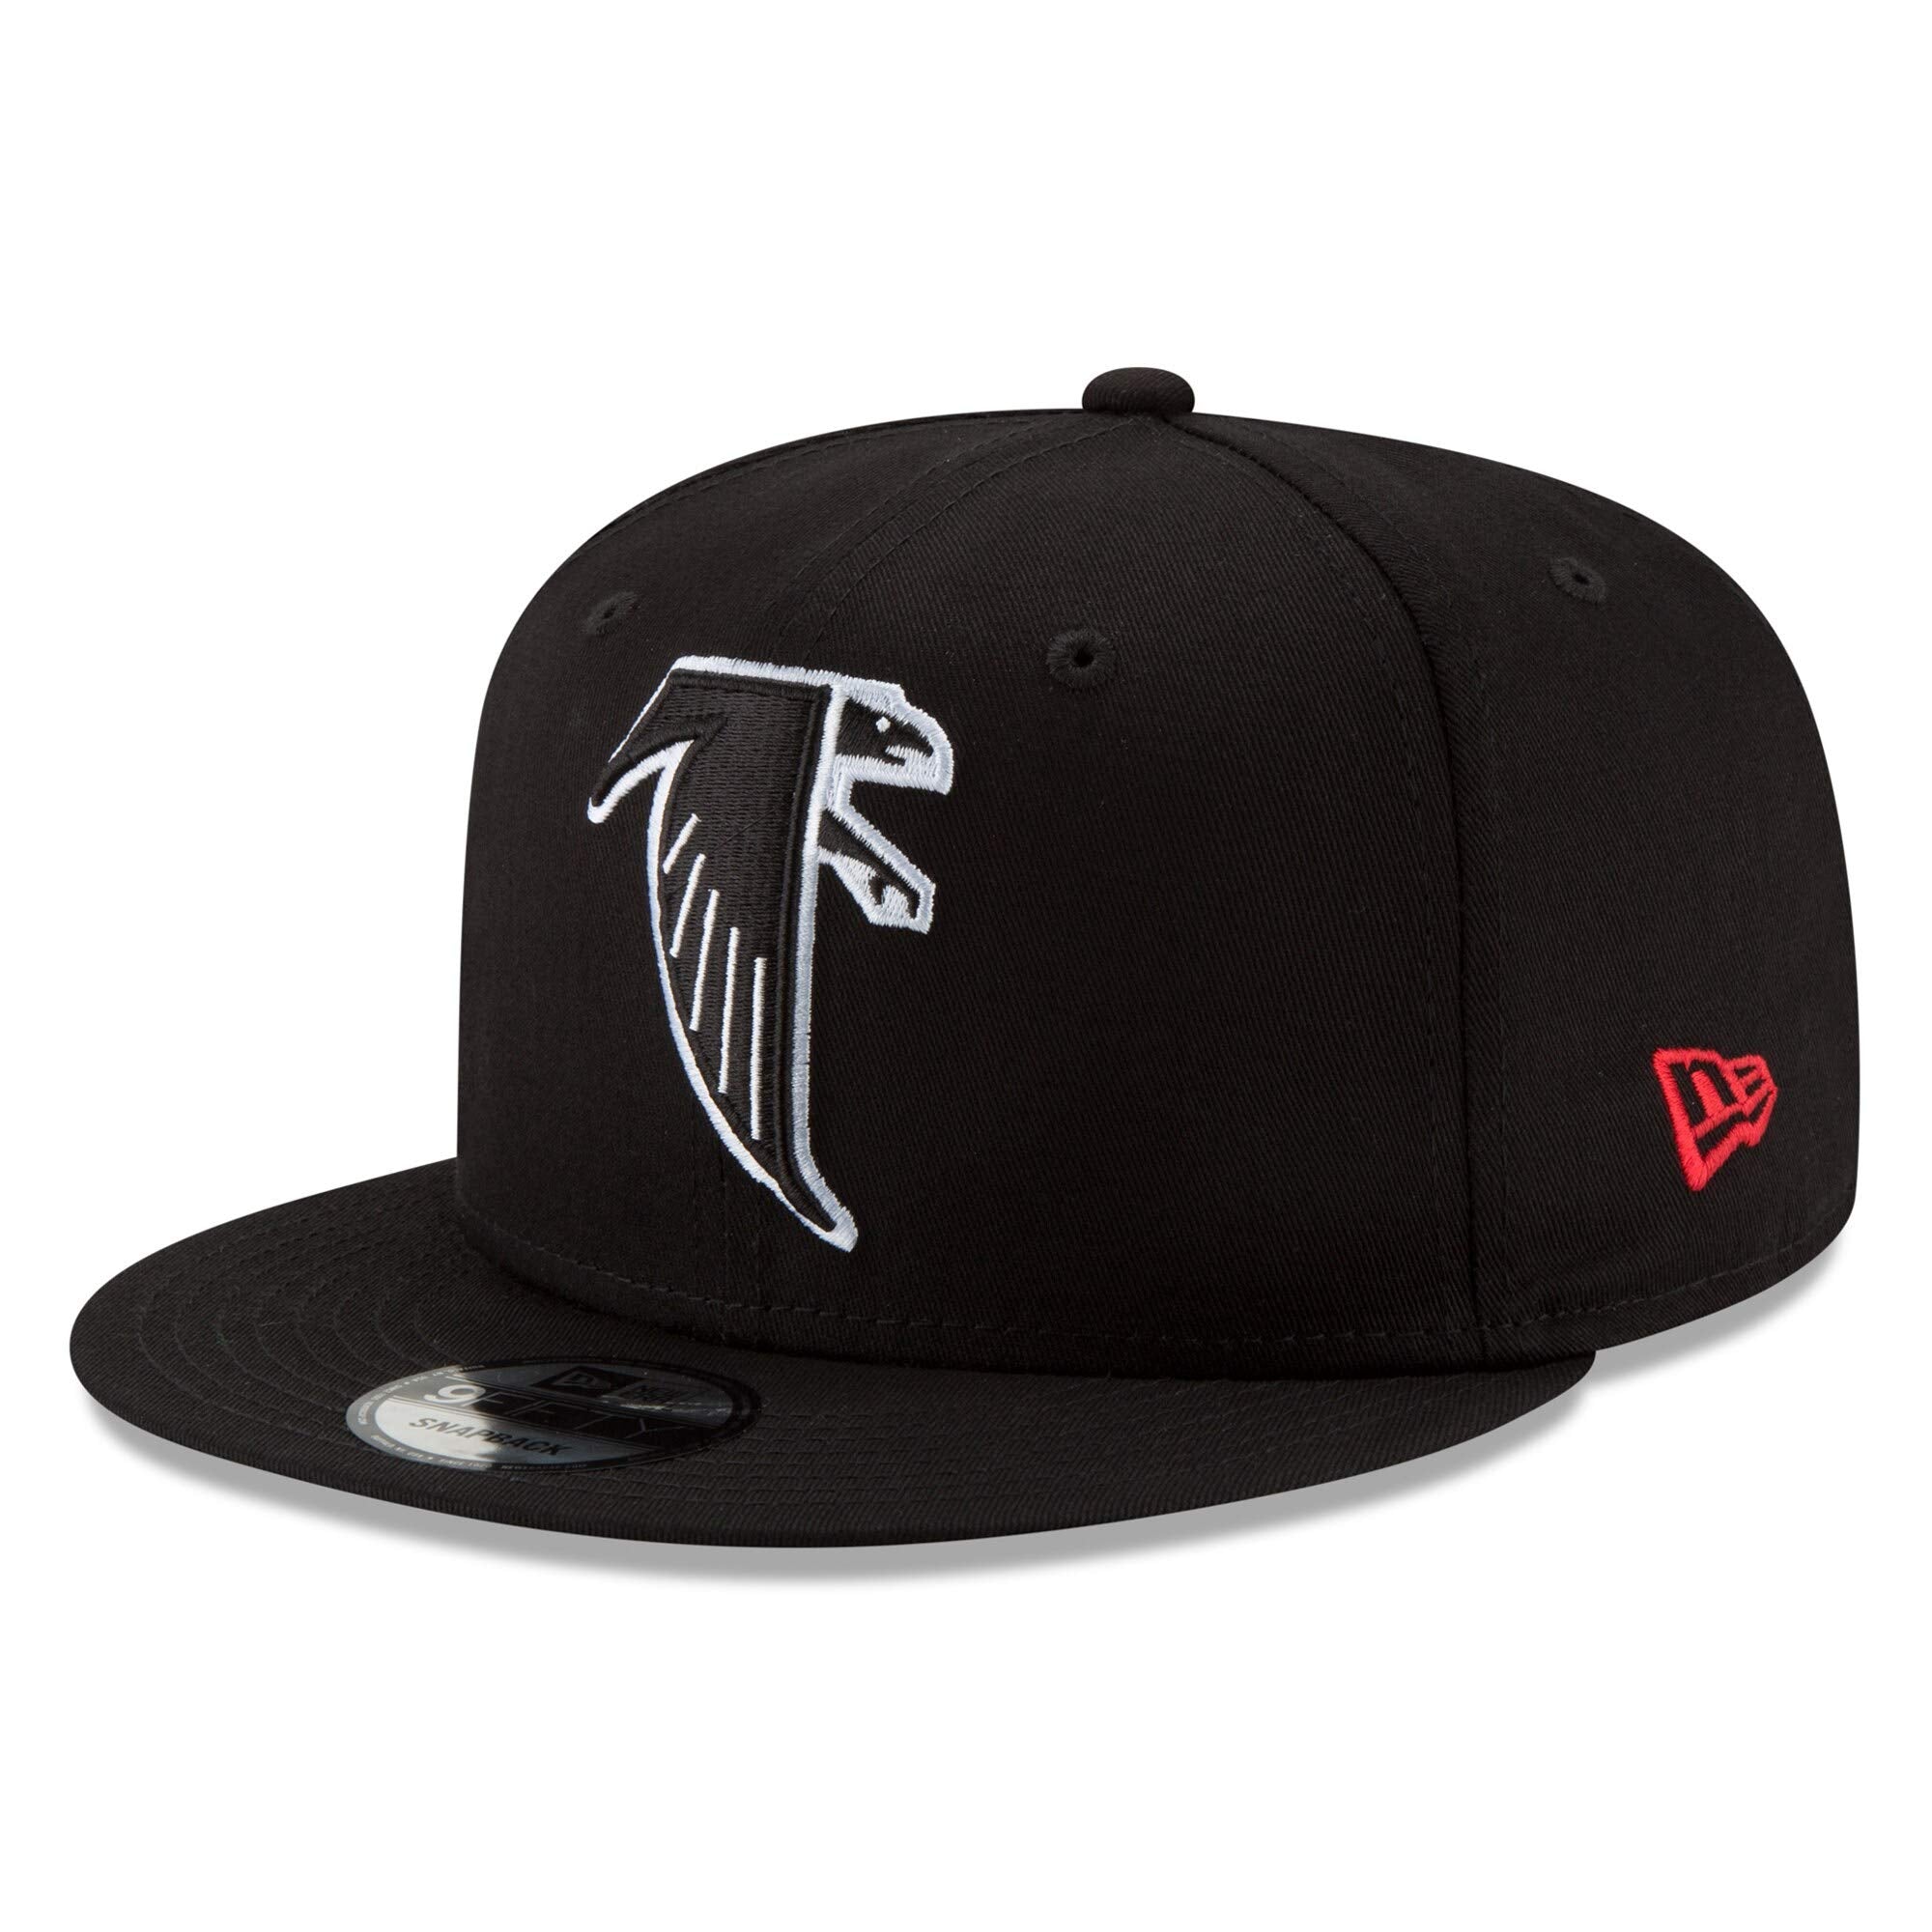 New Era NFL 9FIFTY Throwback Logo Adjustable Snapback Hat Cap One Size Fits All (Atlanta Falcons - Black) - Caps Fitted Caps Fitted New Era